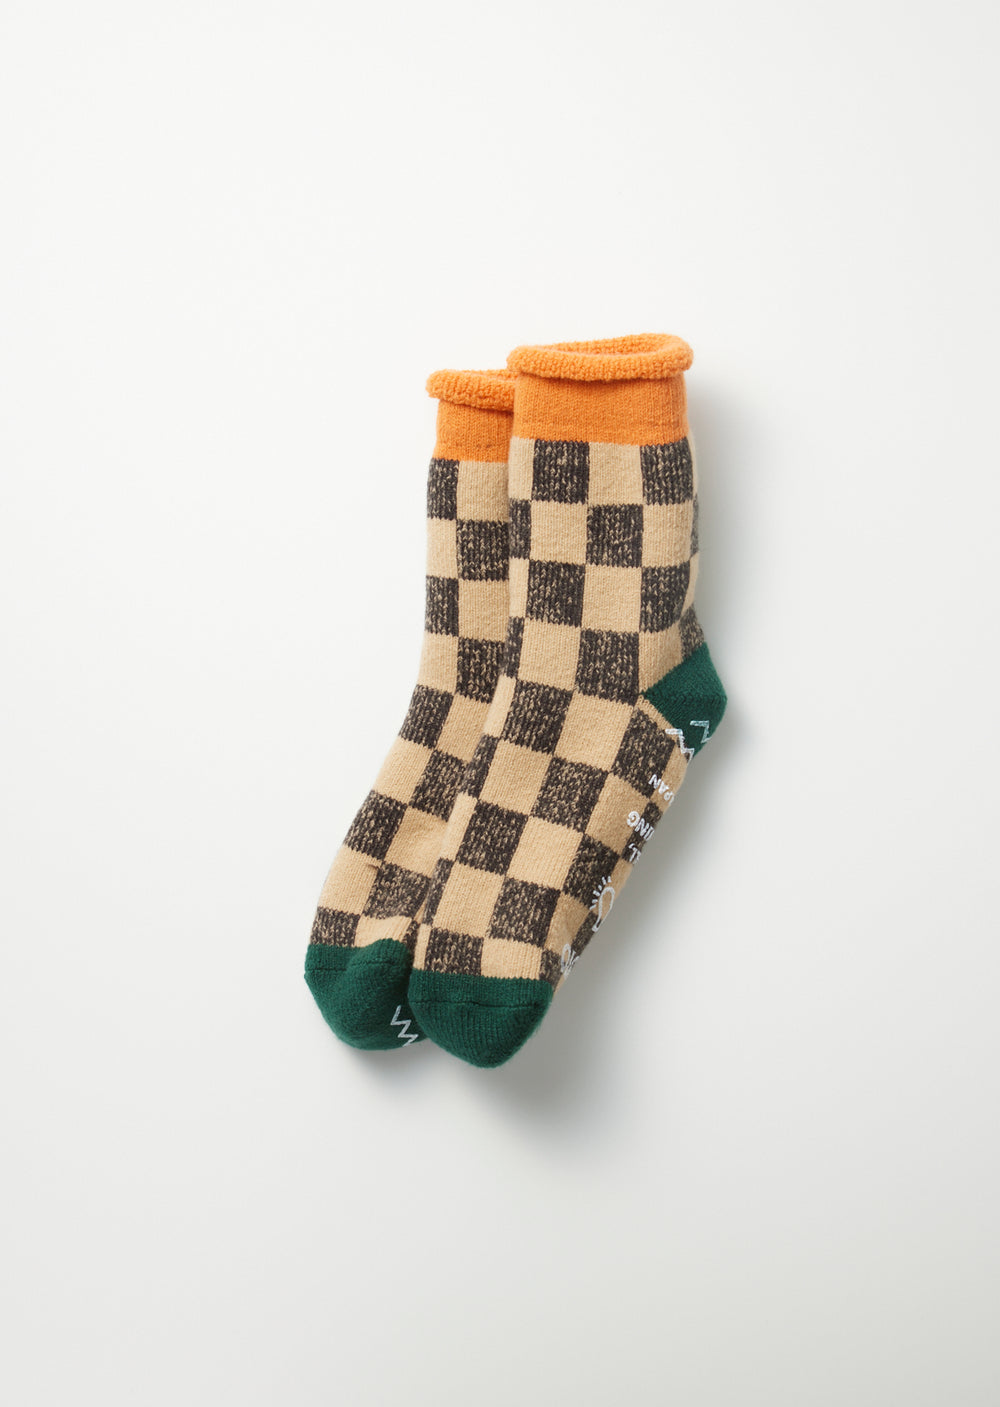 Pile Room Socks Checkerboard - L.Orange/D.Green - R1497